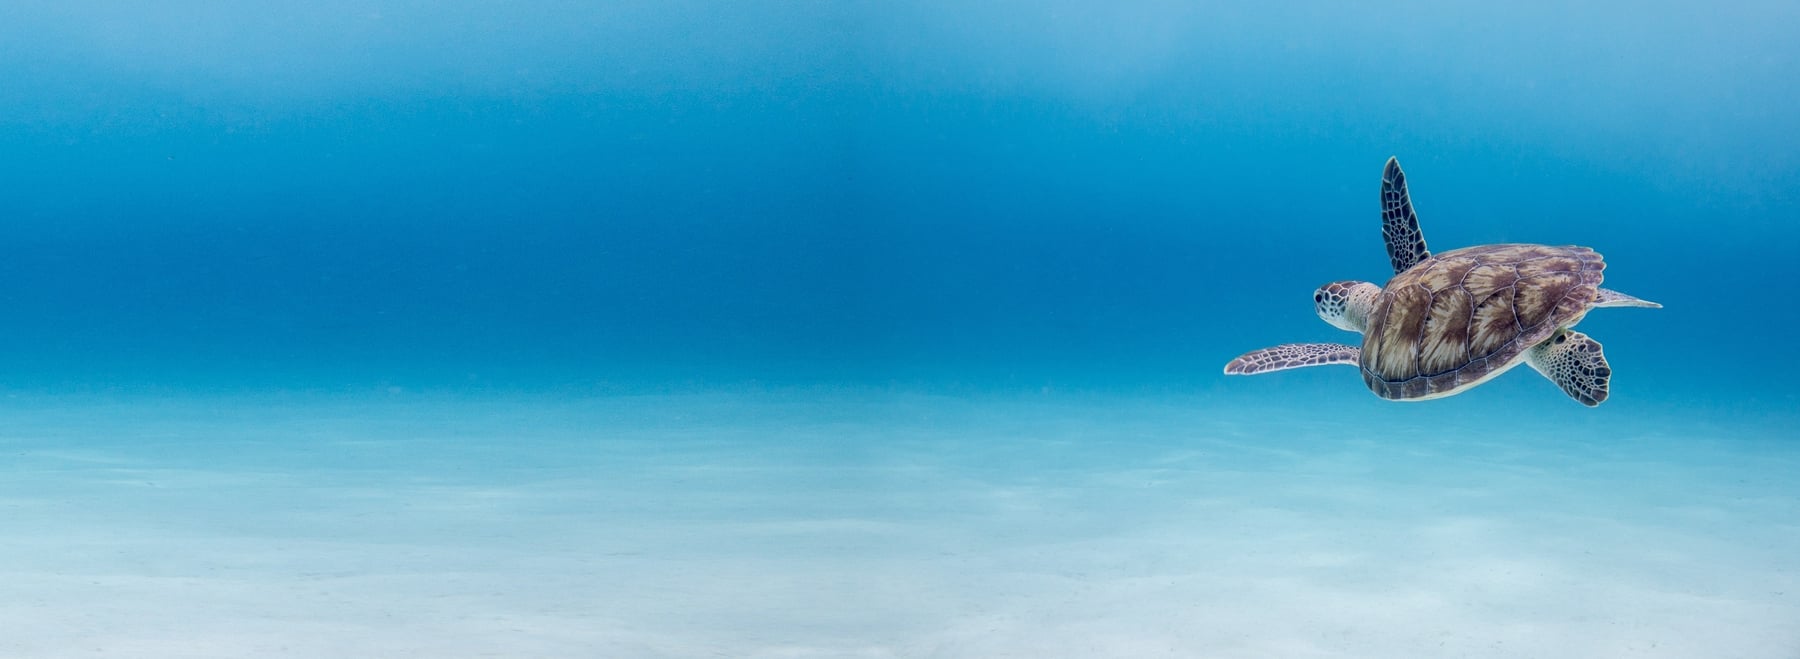 Turtle swimming in clear blue ocean